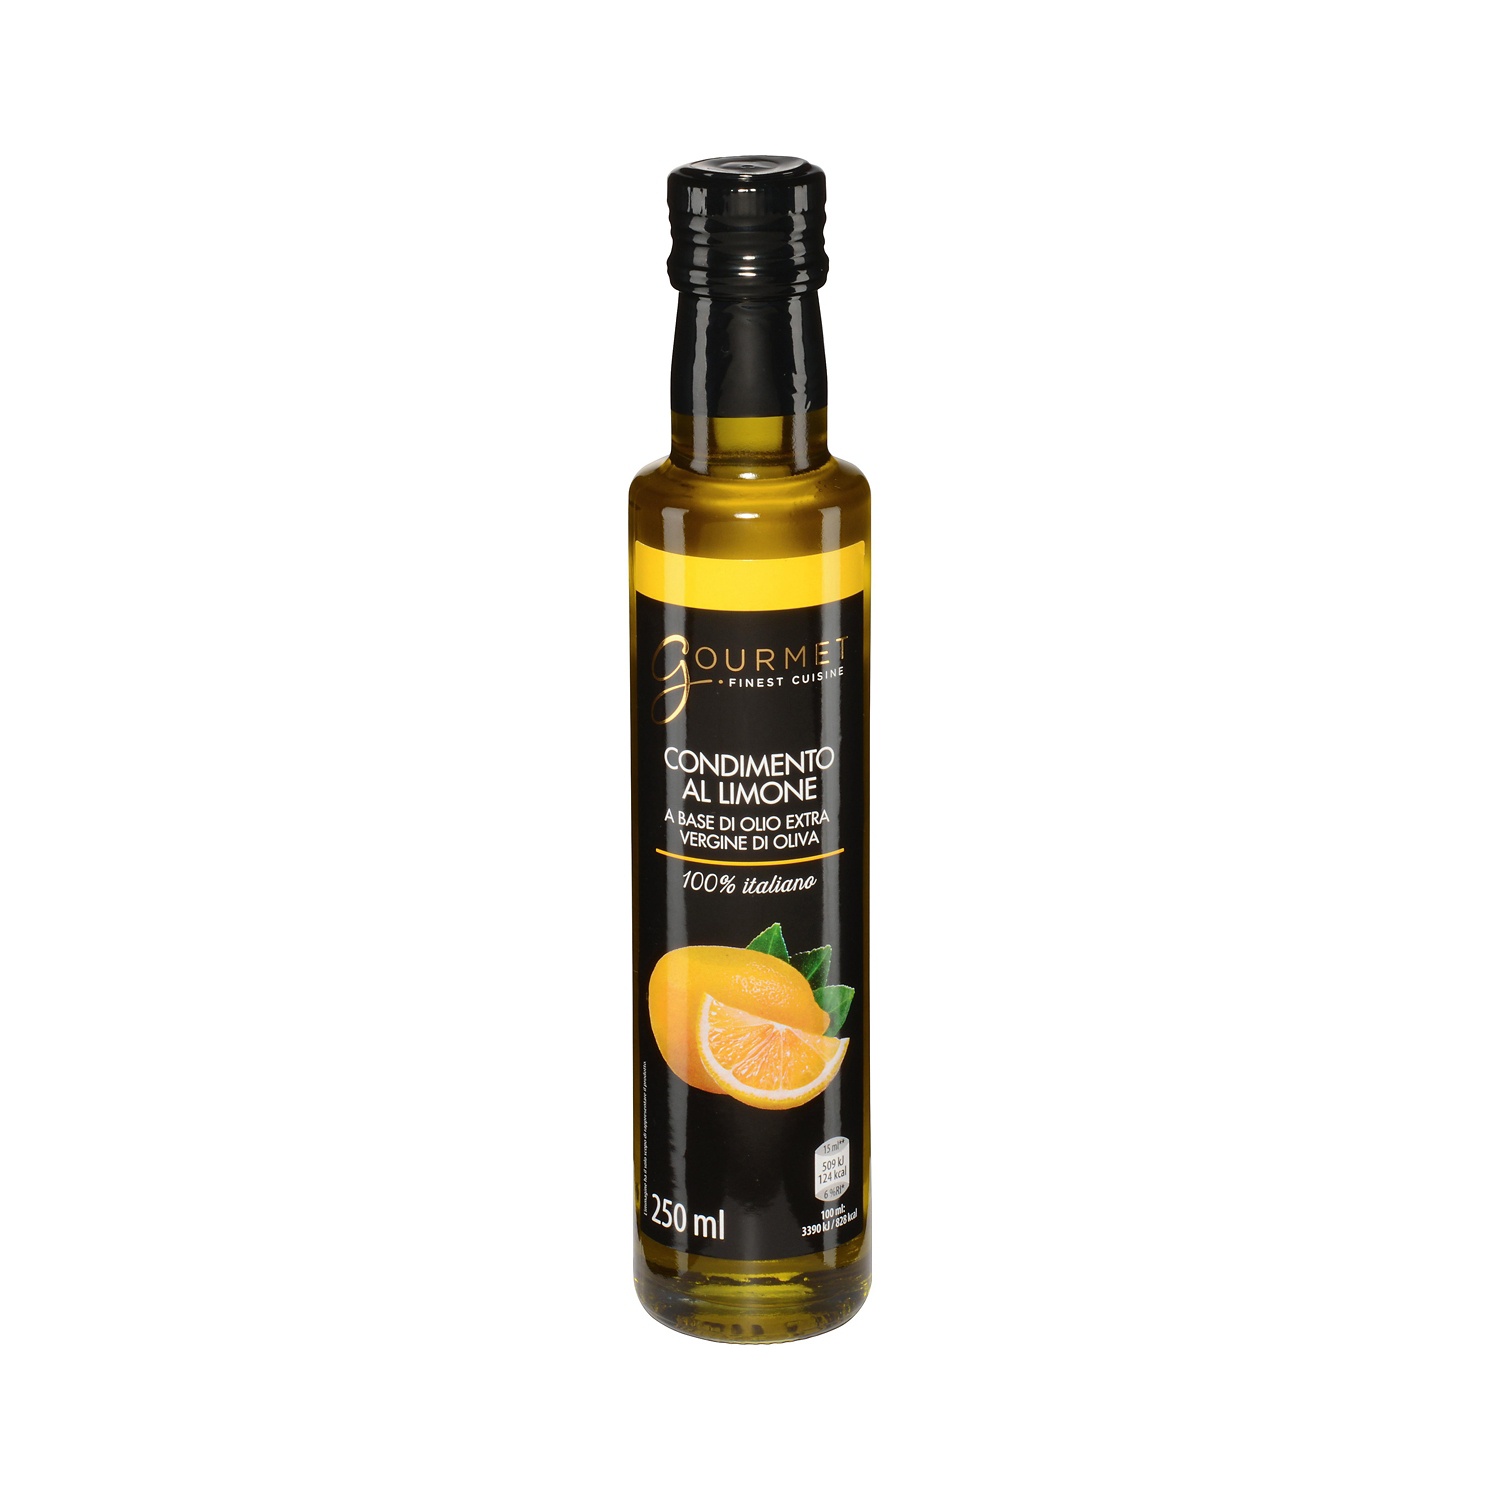 GOURMET Olio extravergine aromatizzato al limone